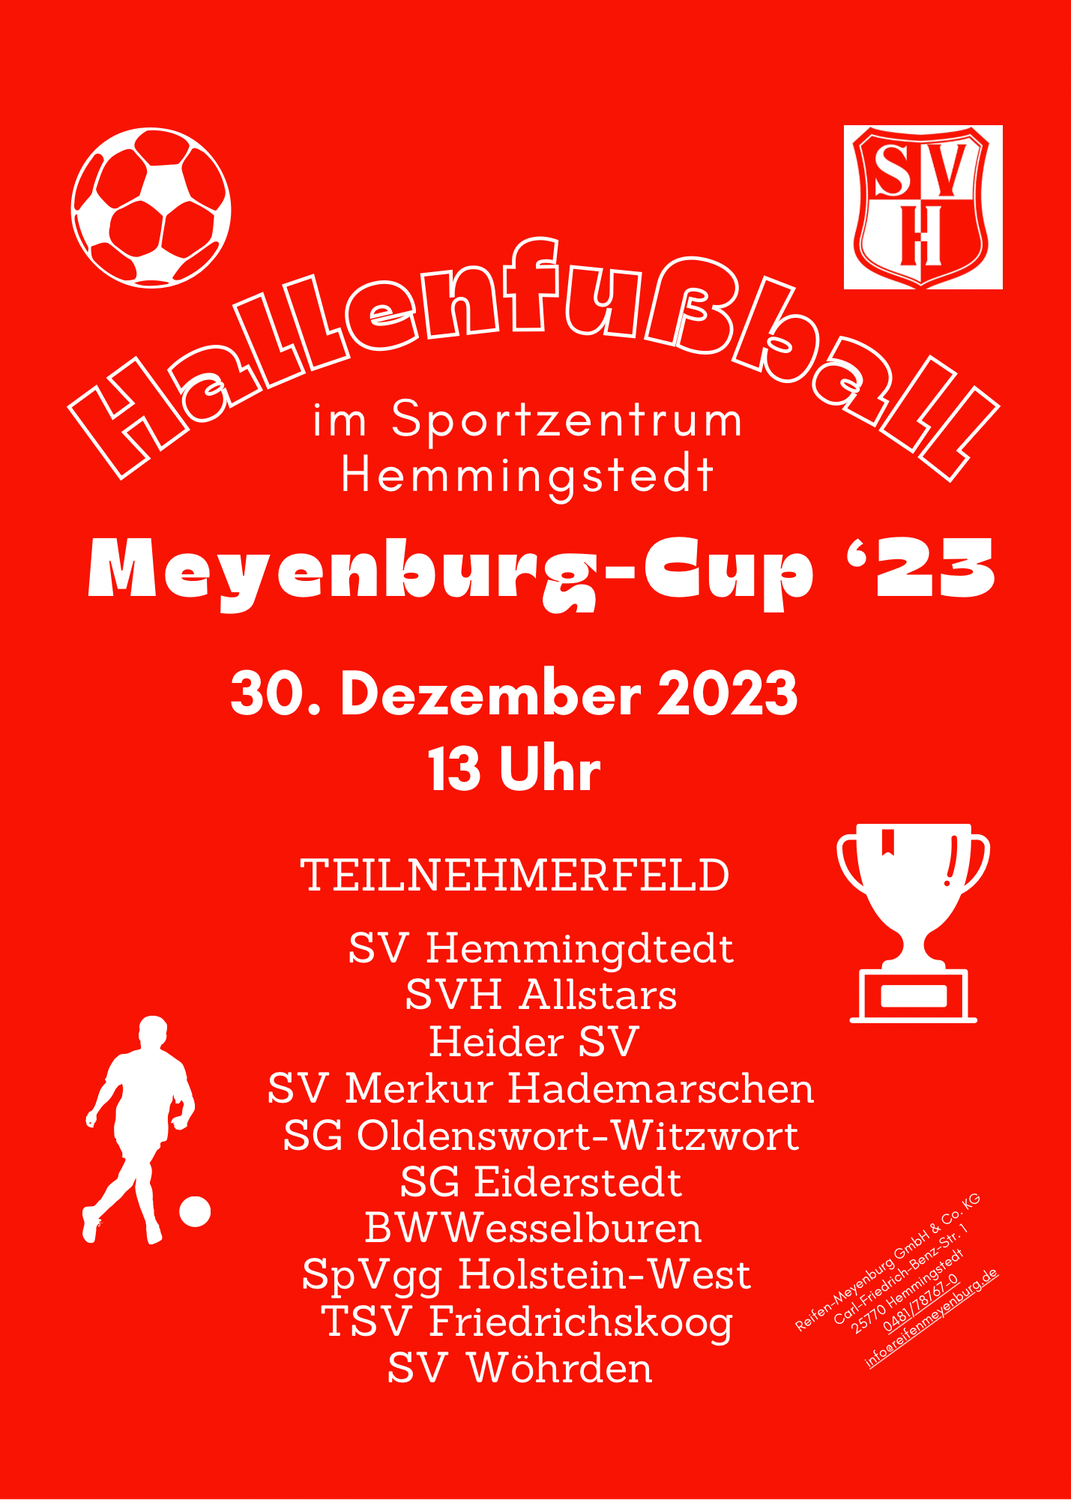 Meyenburg-Cup 23